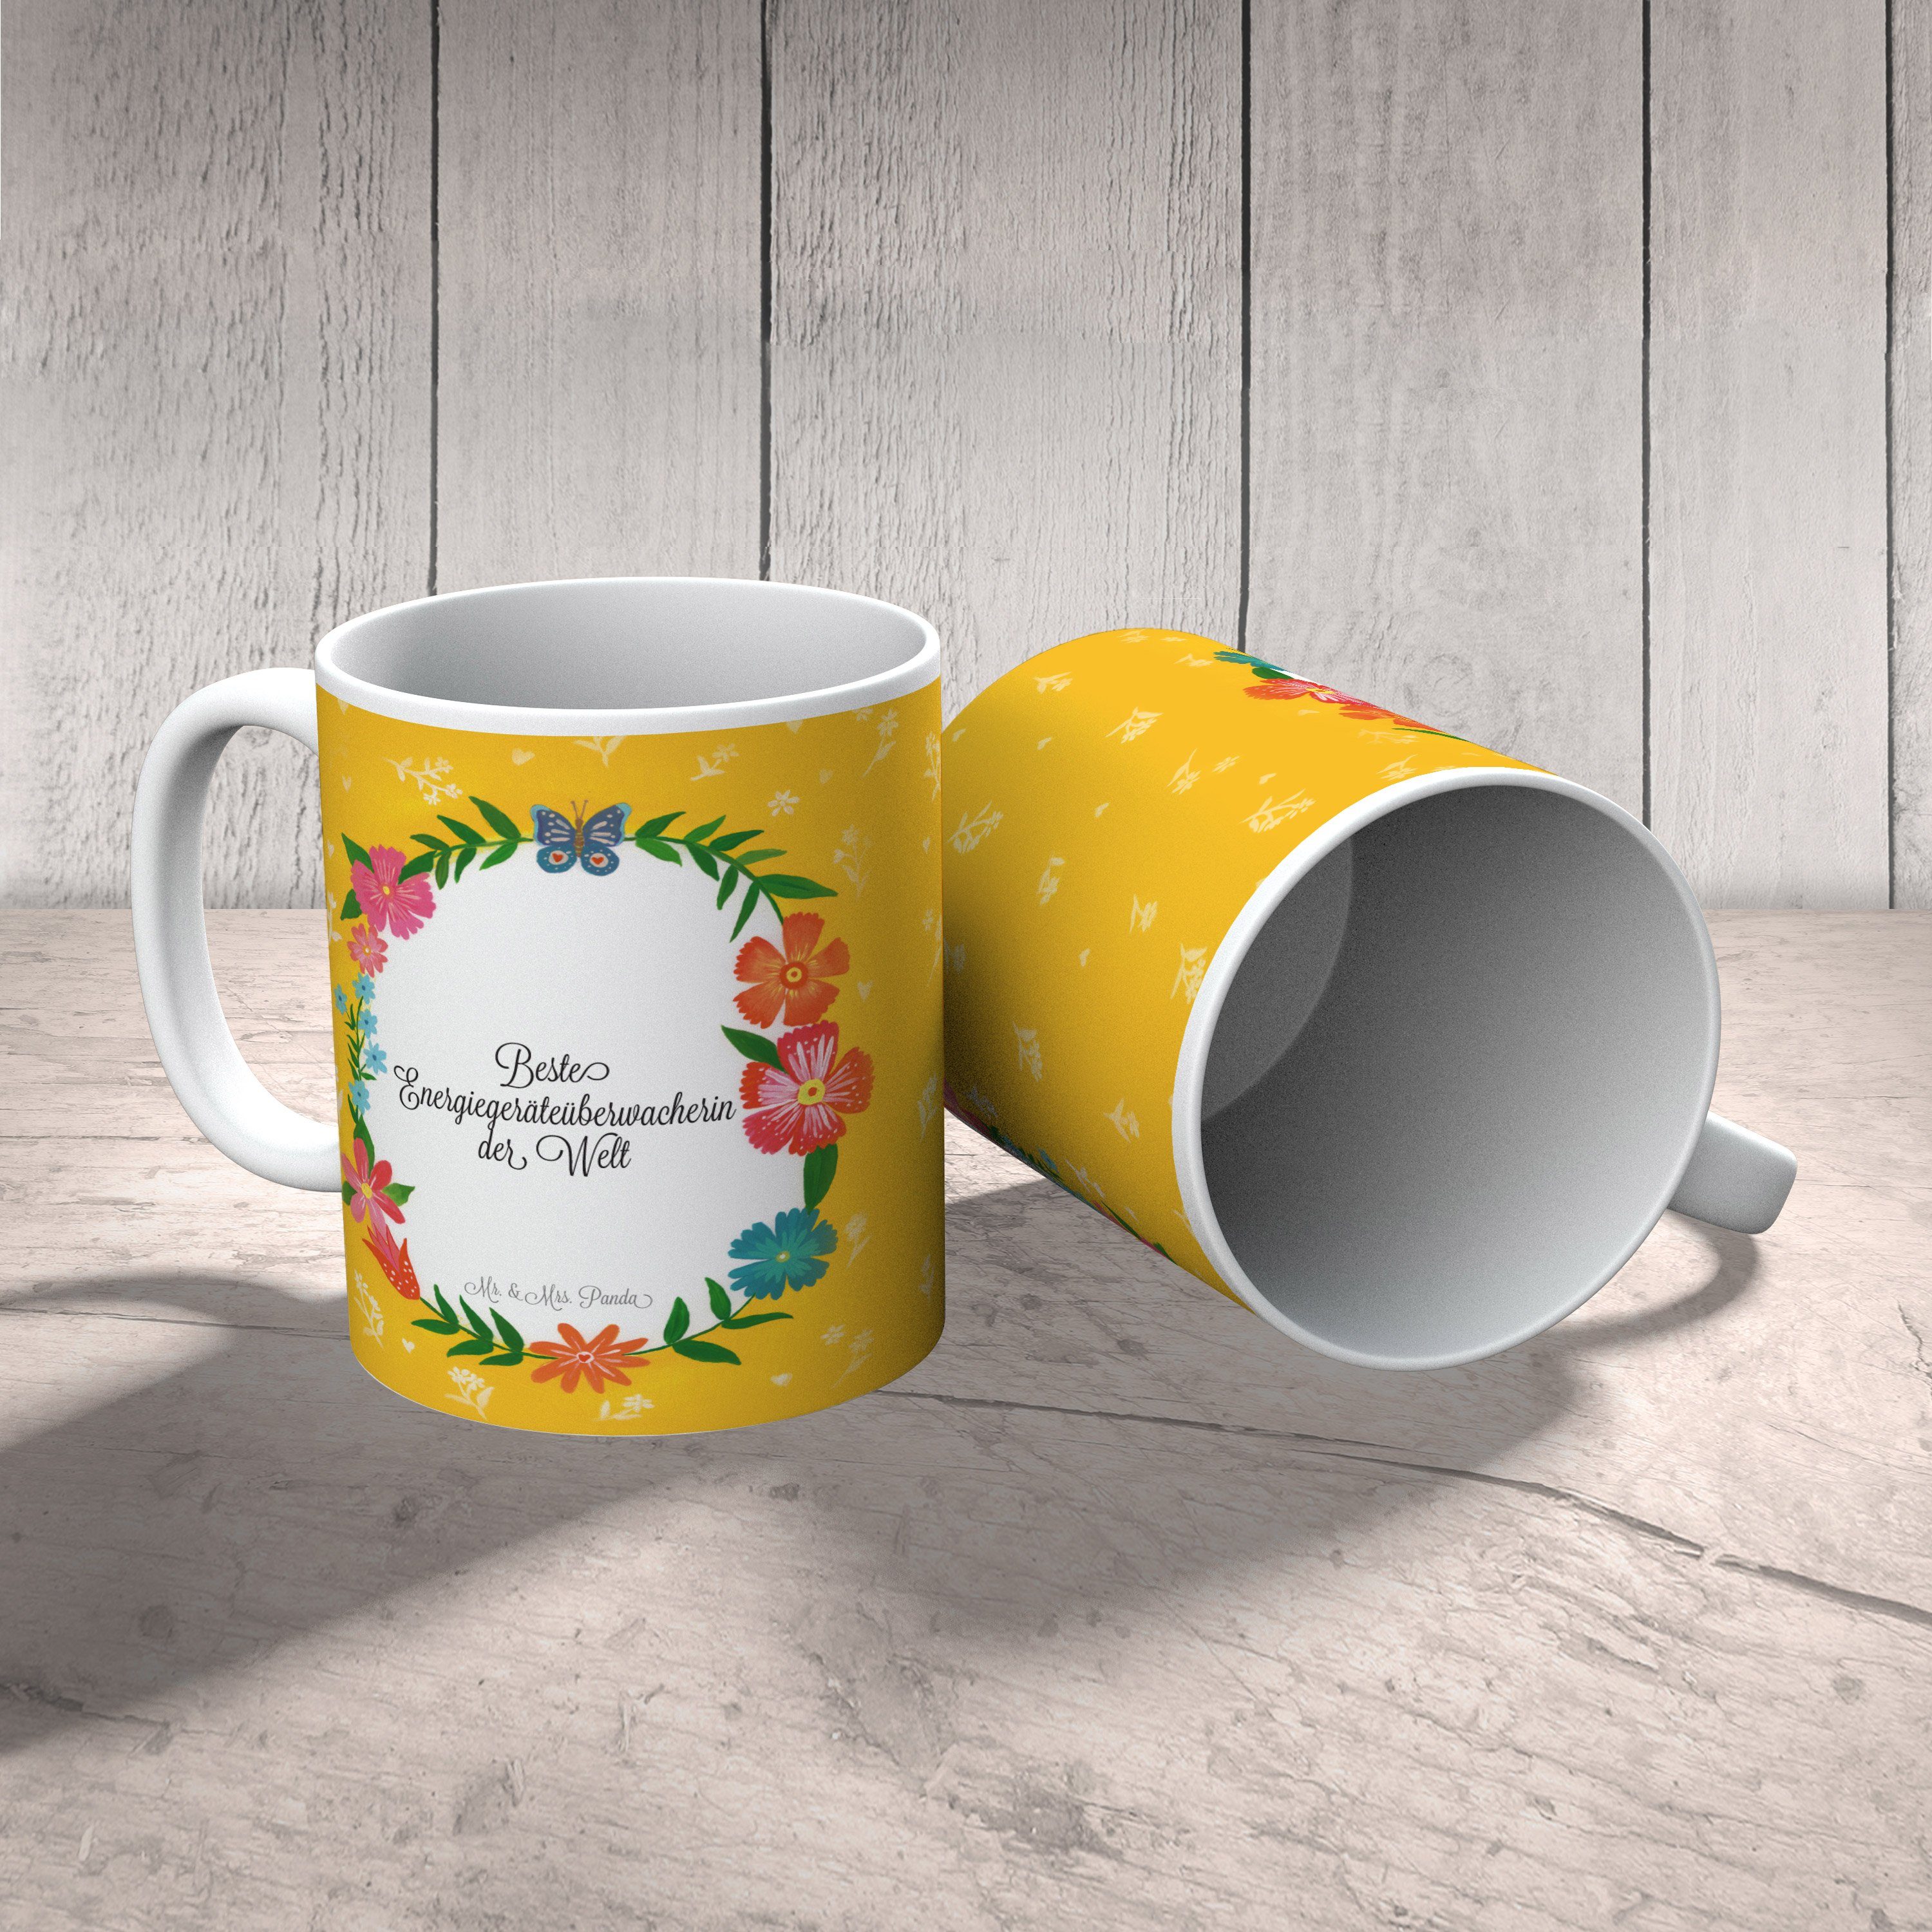 Mr. & Mrs. Panda Tasse Teet, - Geschenk, Keramiktasse, Energiegeräteüberwacherin Gratulation, Keramik